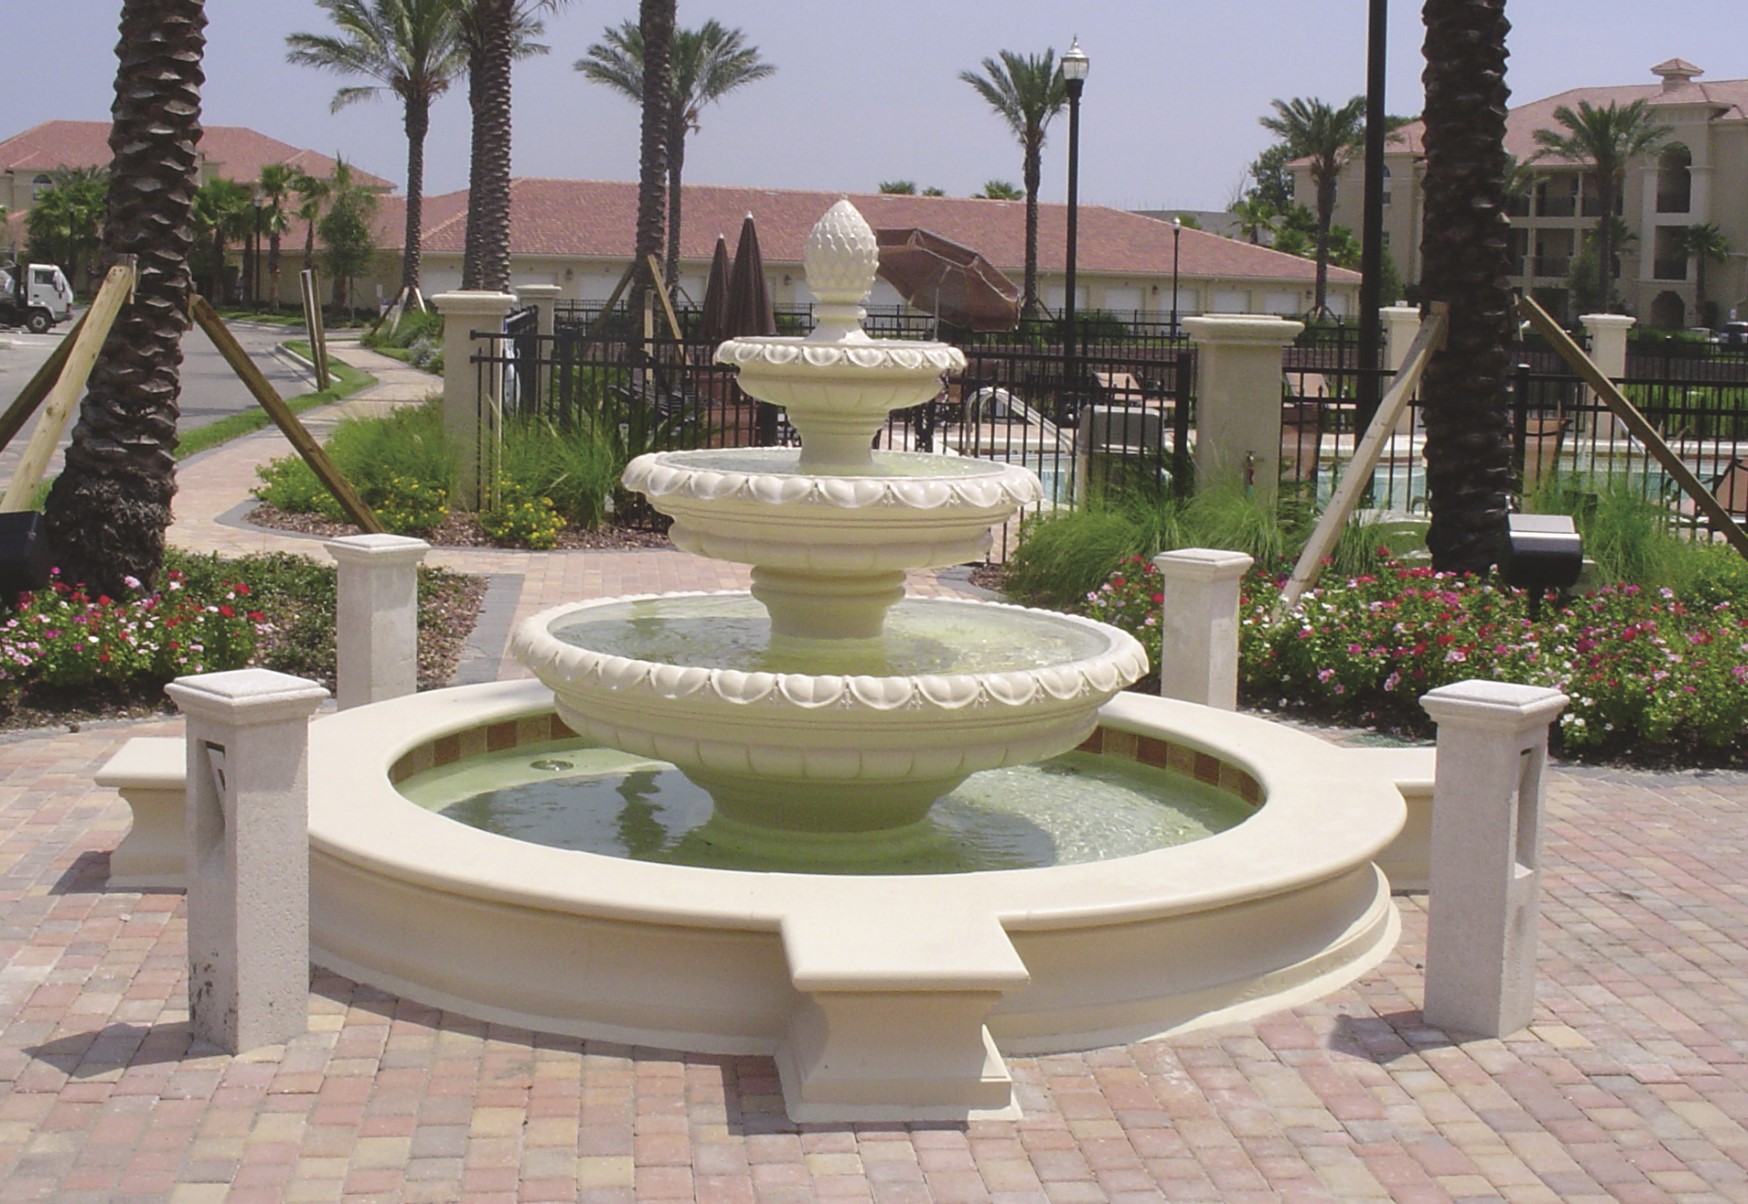 Mira Vista Fountain - amenity center